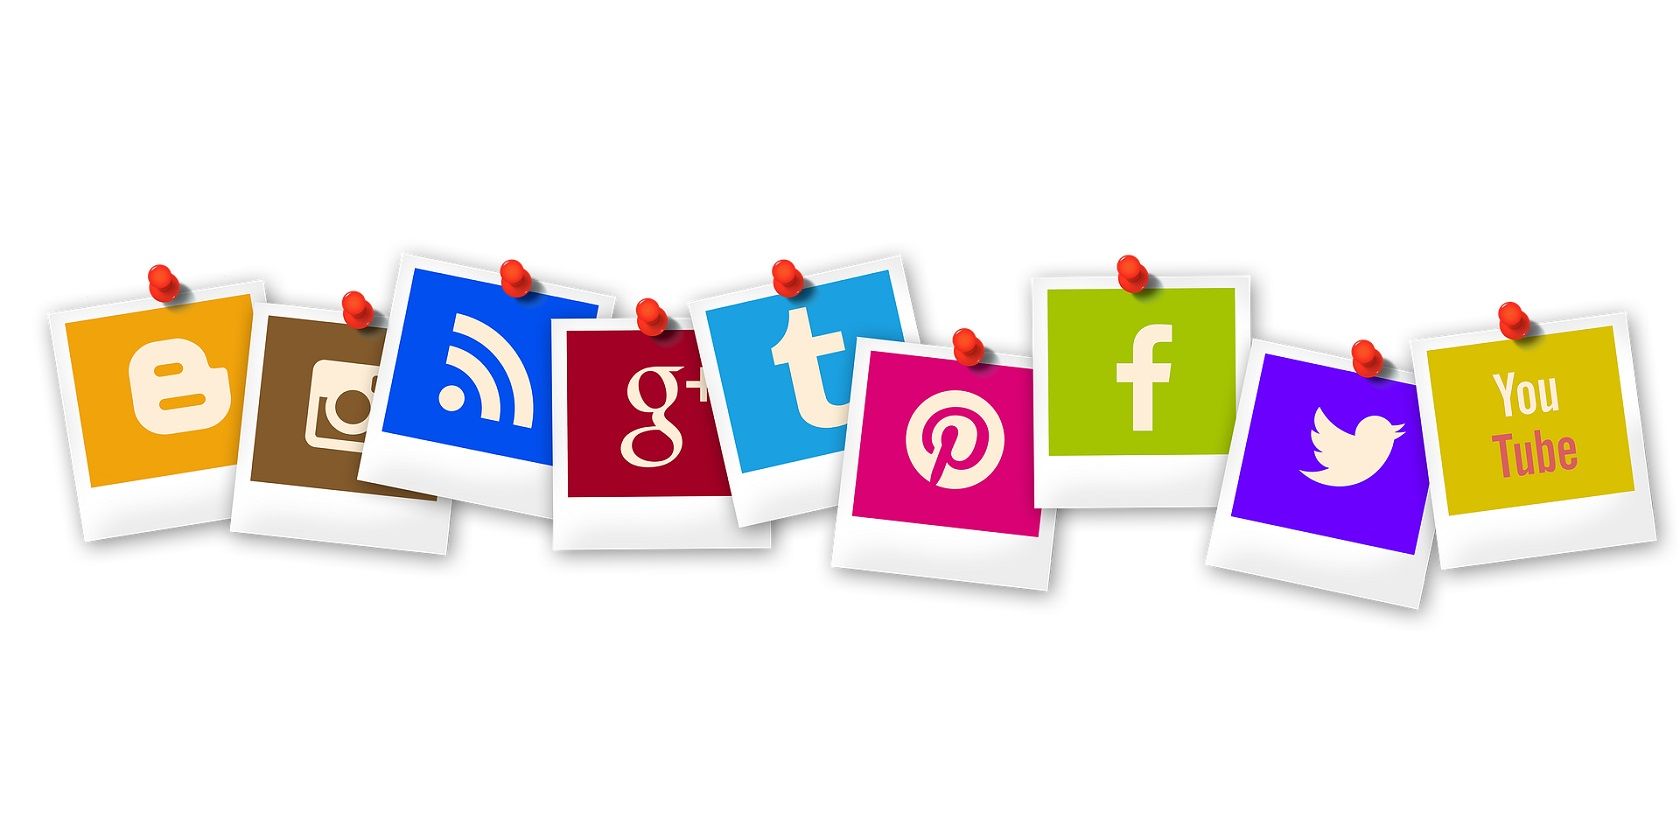 Image with various social media network logos